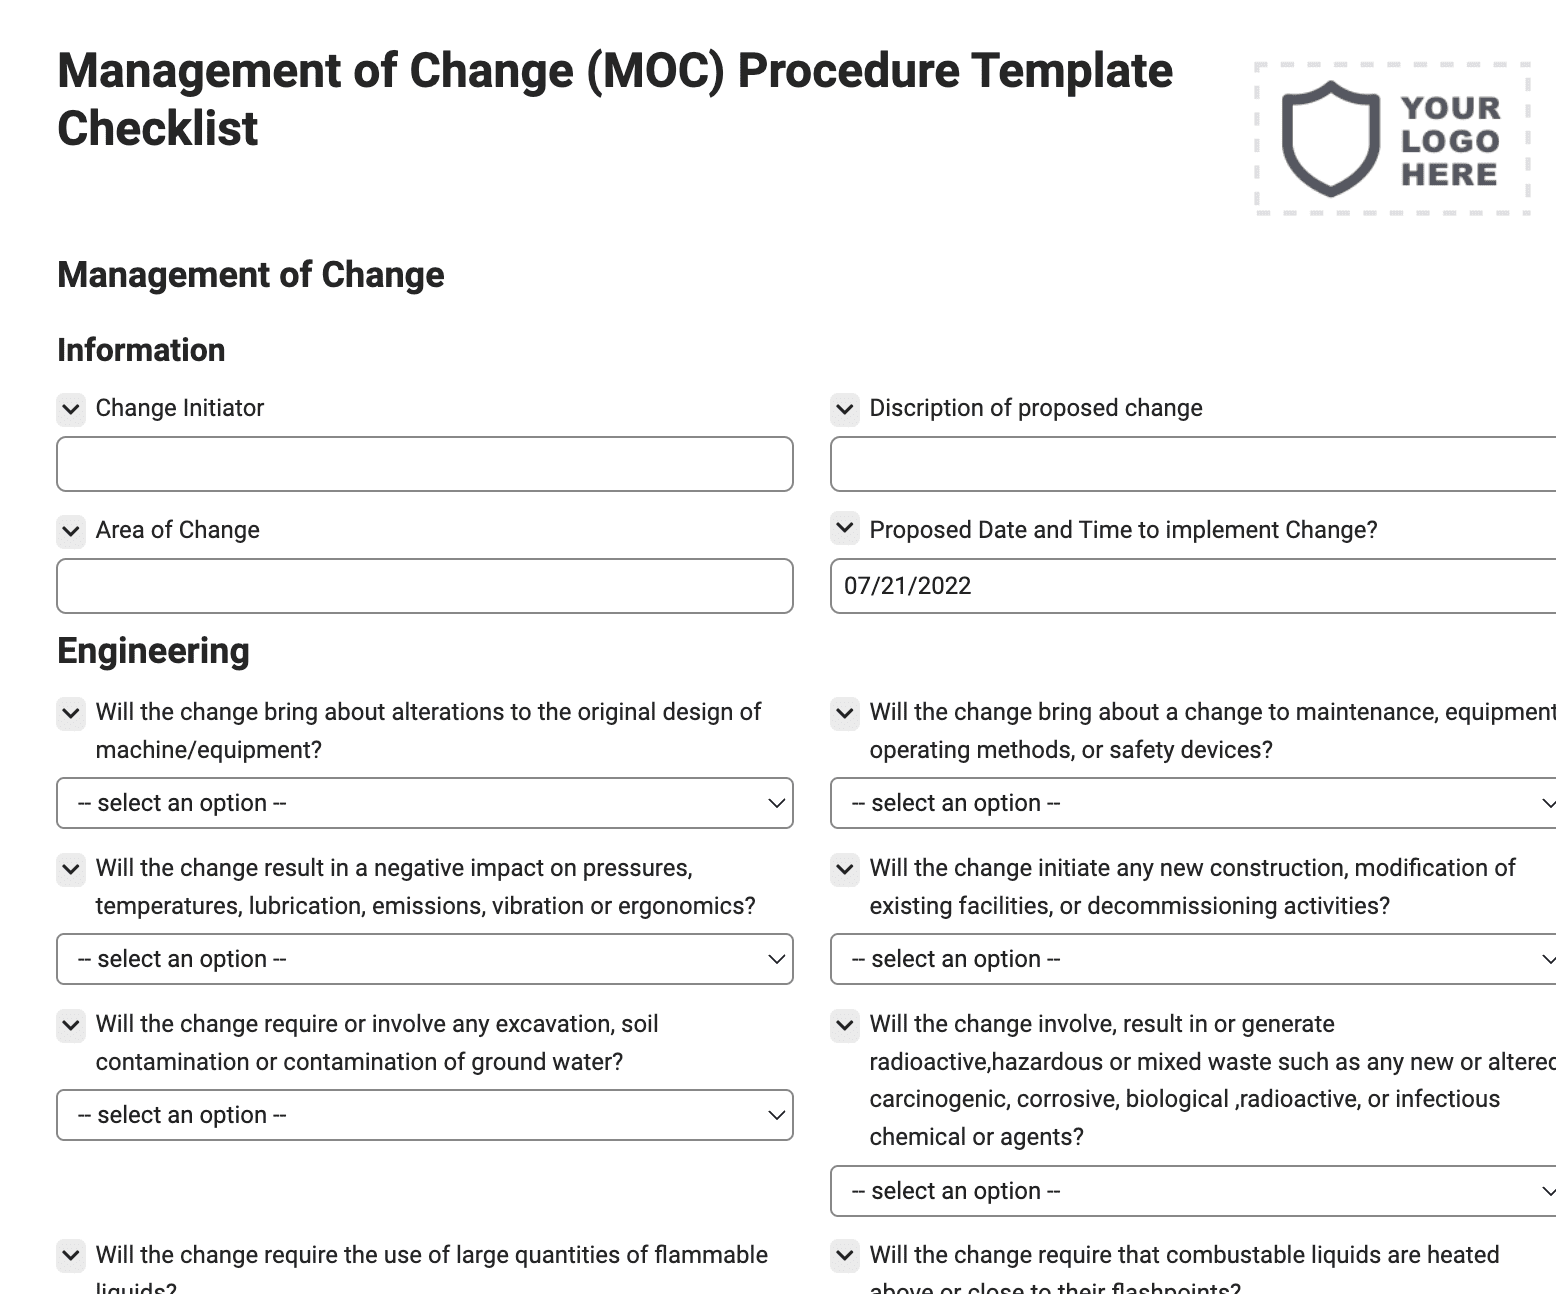 Management of Change (MOC) Procedure Template Checklist